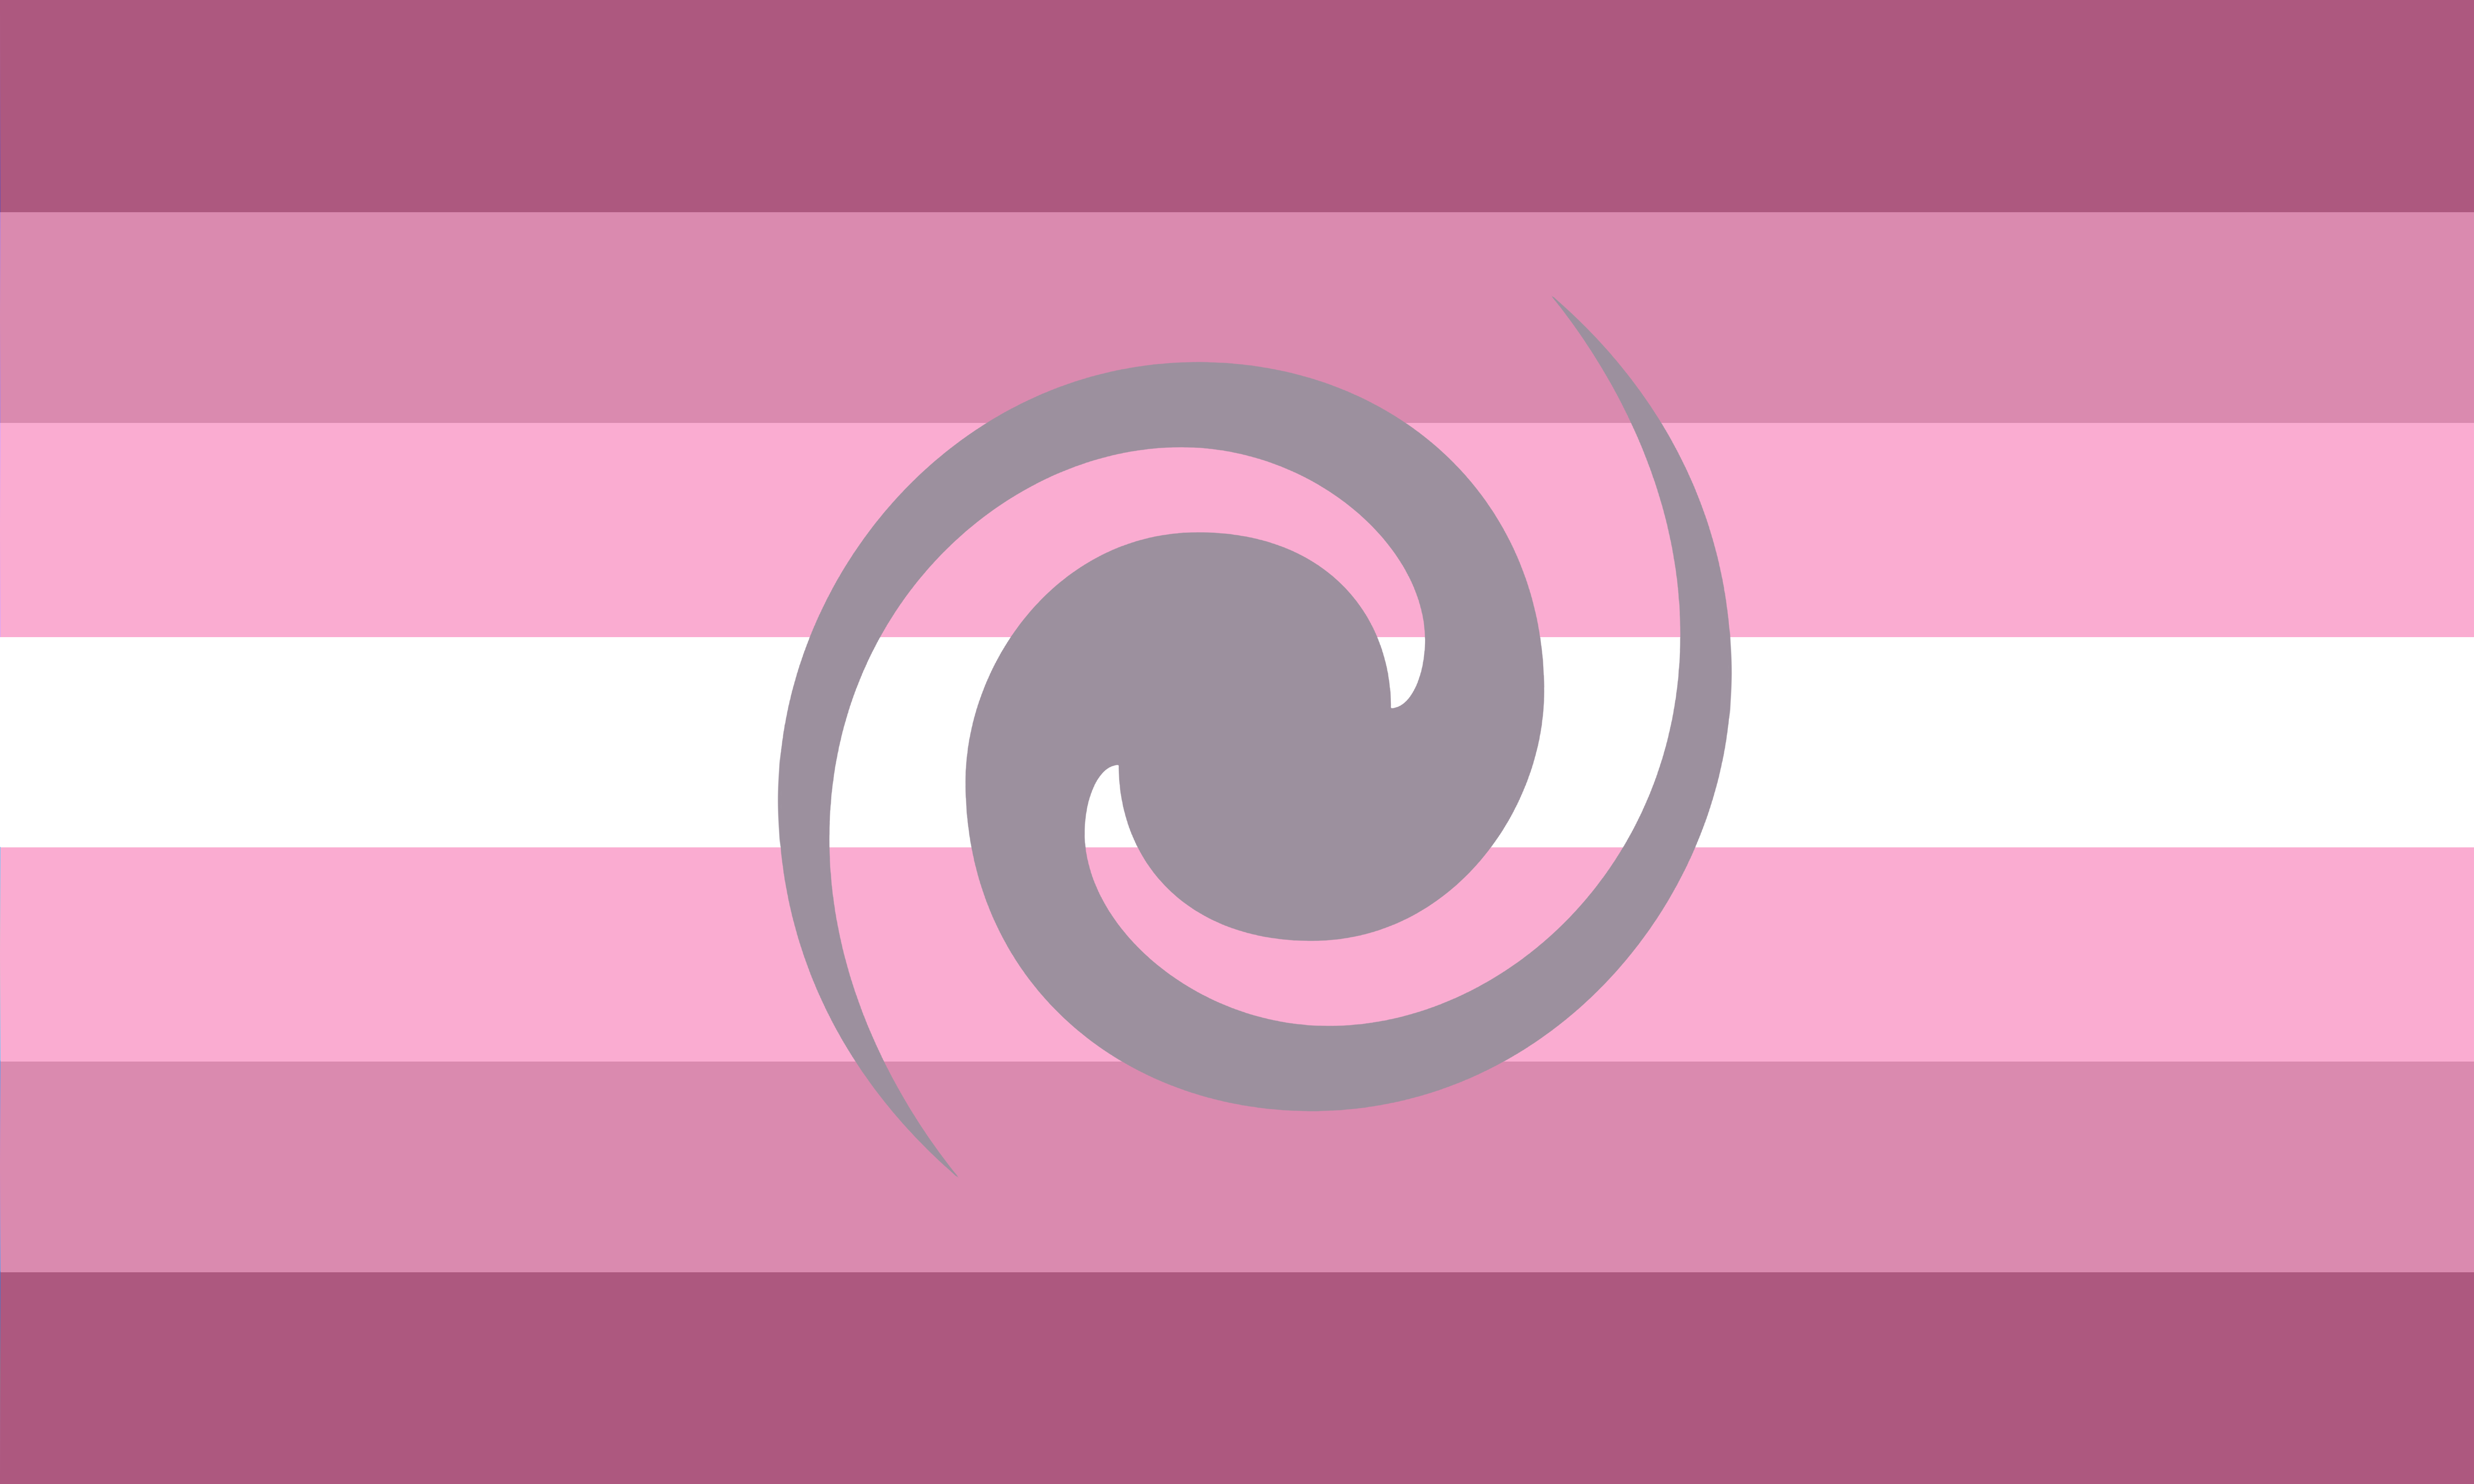 Estrialfeminine by Pride-Flags on DeviantArt